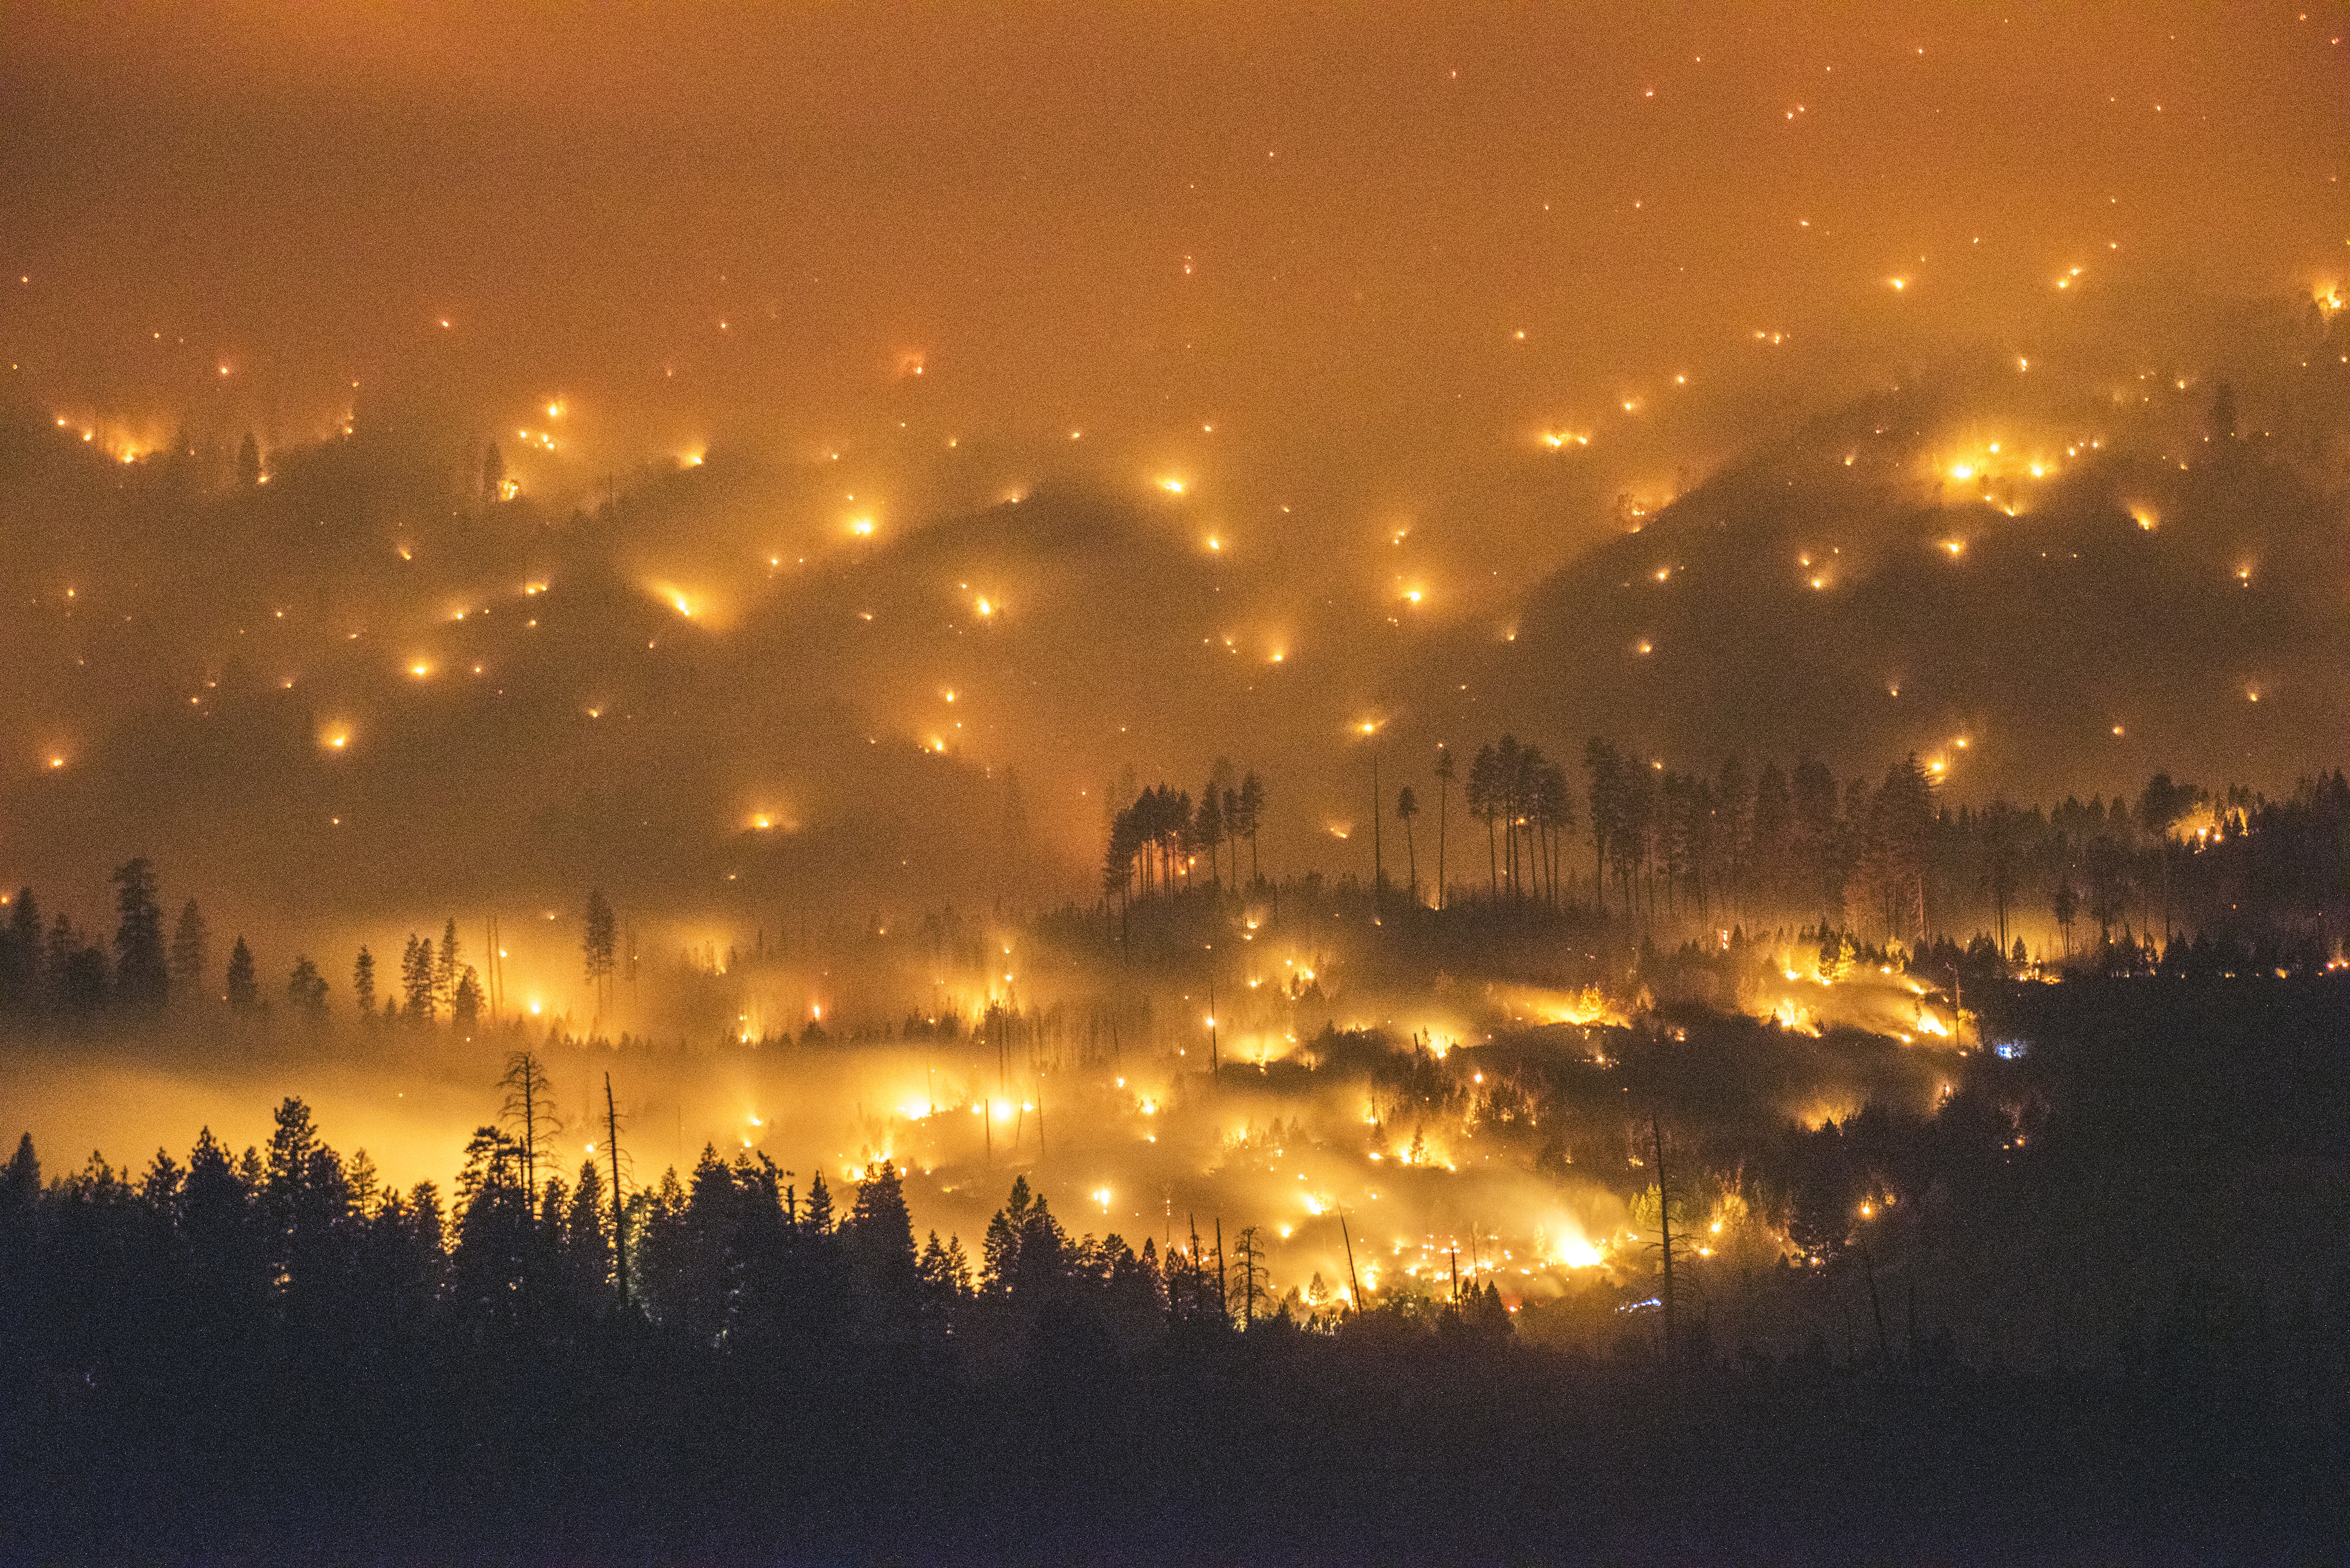 A long exposure image shows the El Portal Fire burning near Yosemite National Park, Calif., on July 27, 2014. (Stuart Palley—EPA)